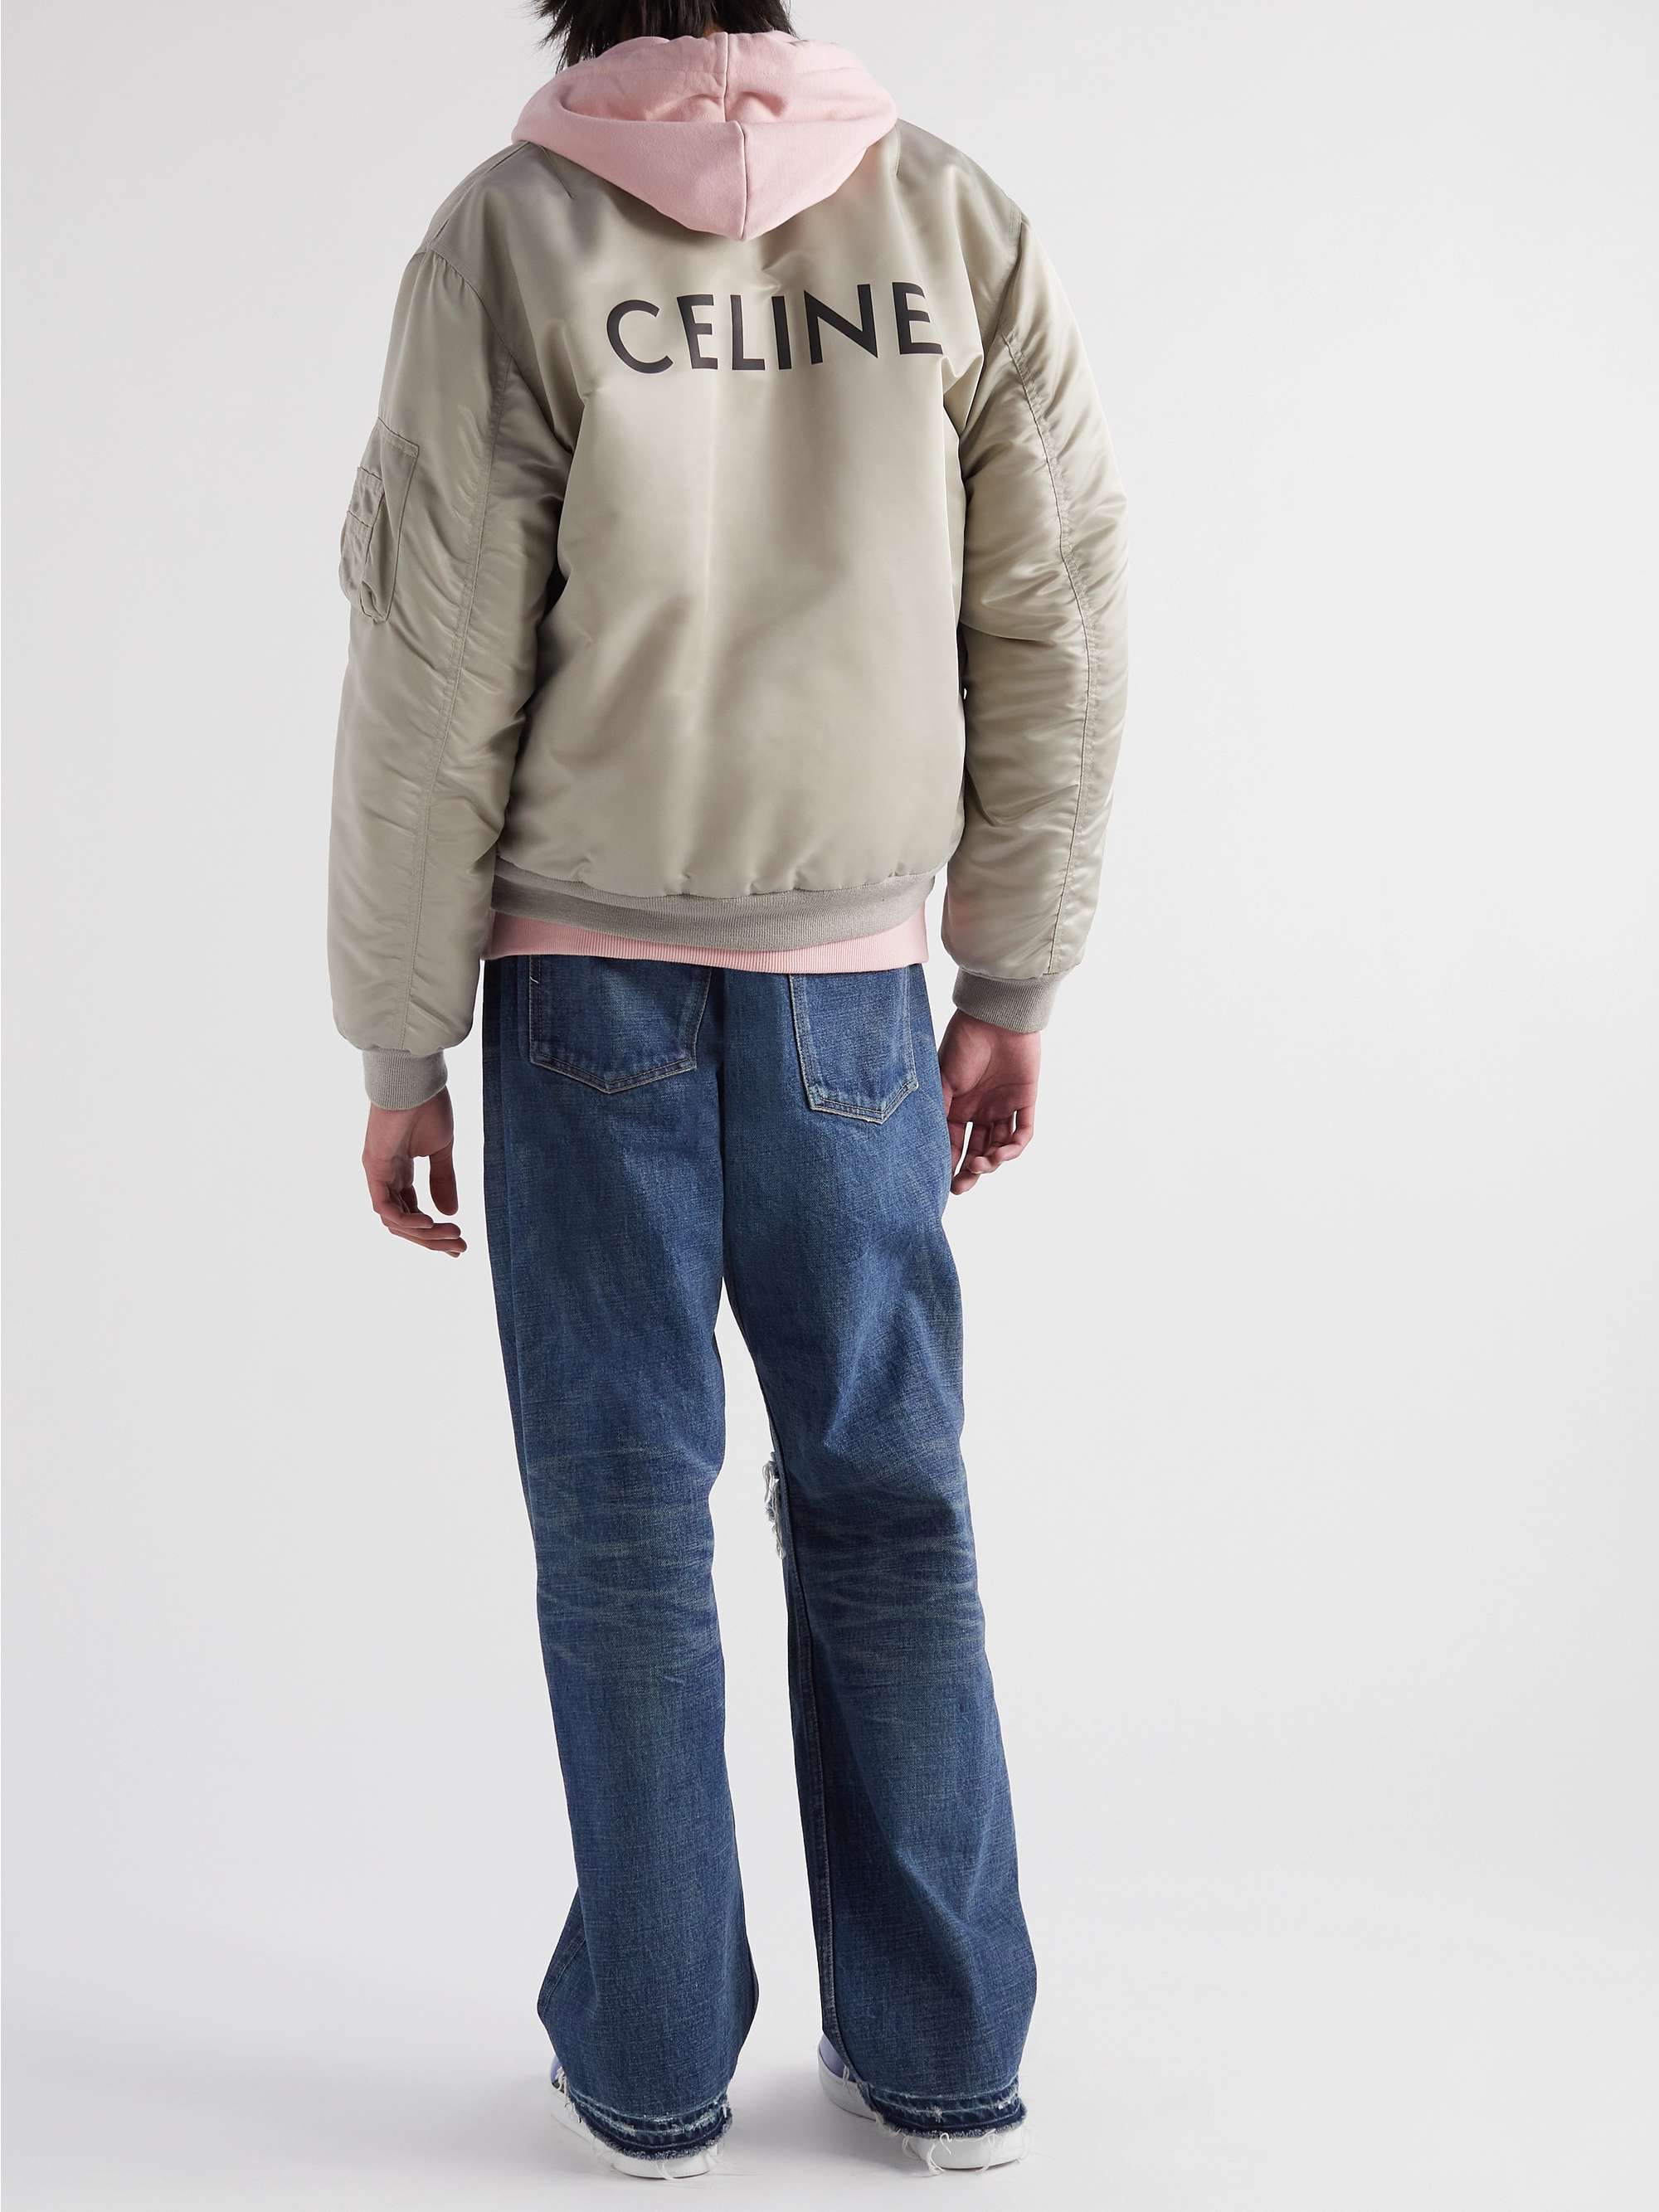 CELINE HOMME Logo-Print Chain-Embellished Nylon Bomber Jacket | MR PORTER